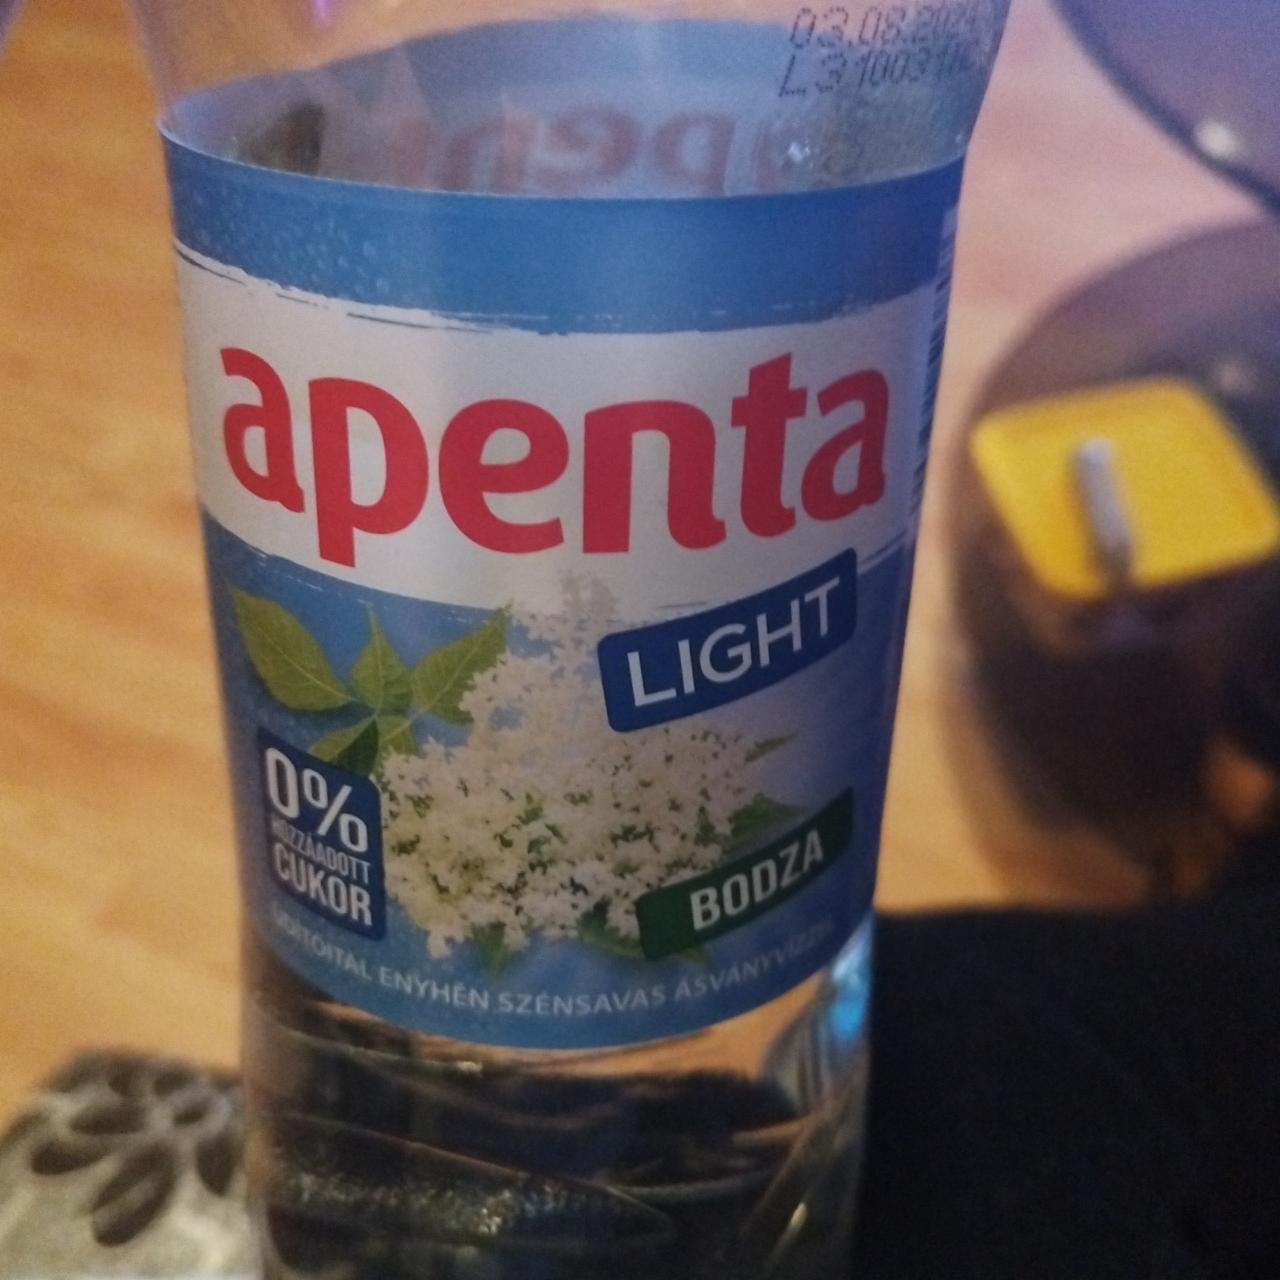 Képek - Apenta Bodza light 0% cukor